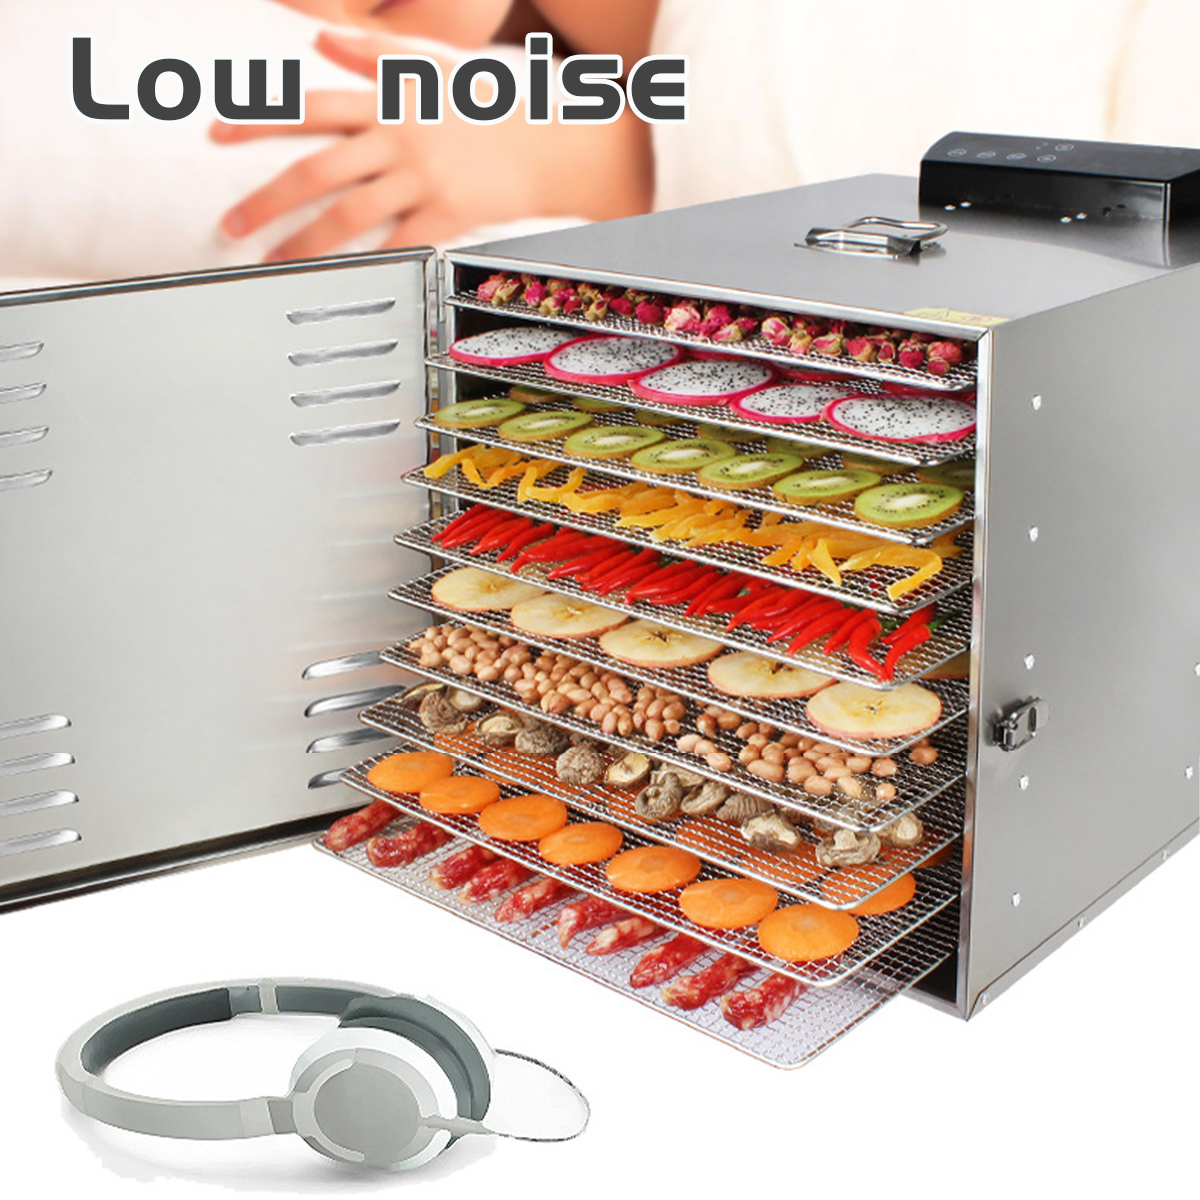 Food-Dehydrator-220V-1000W-Stainless-Steel-Yogurt-Fruit-Dryer-USEUAU-Plug-1759407-4